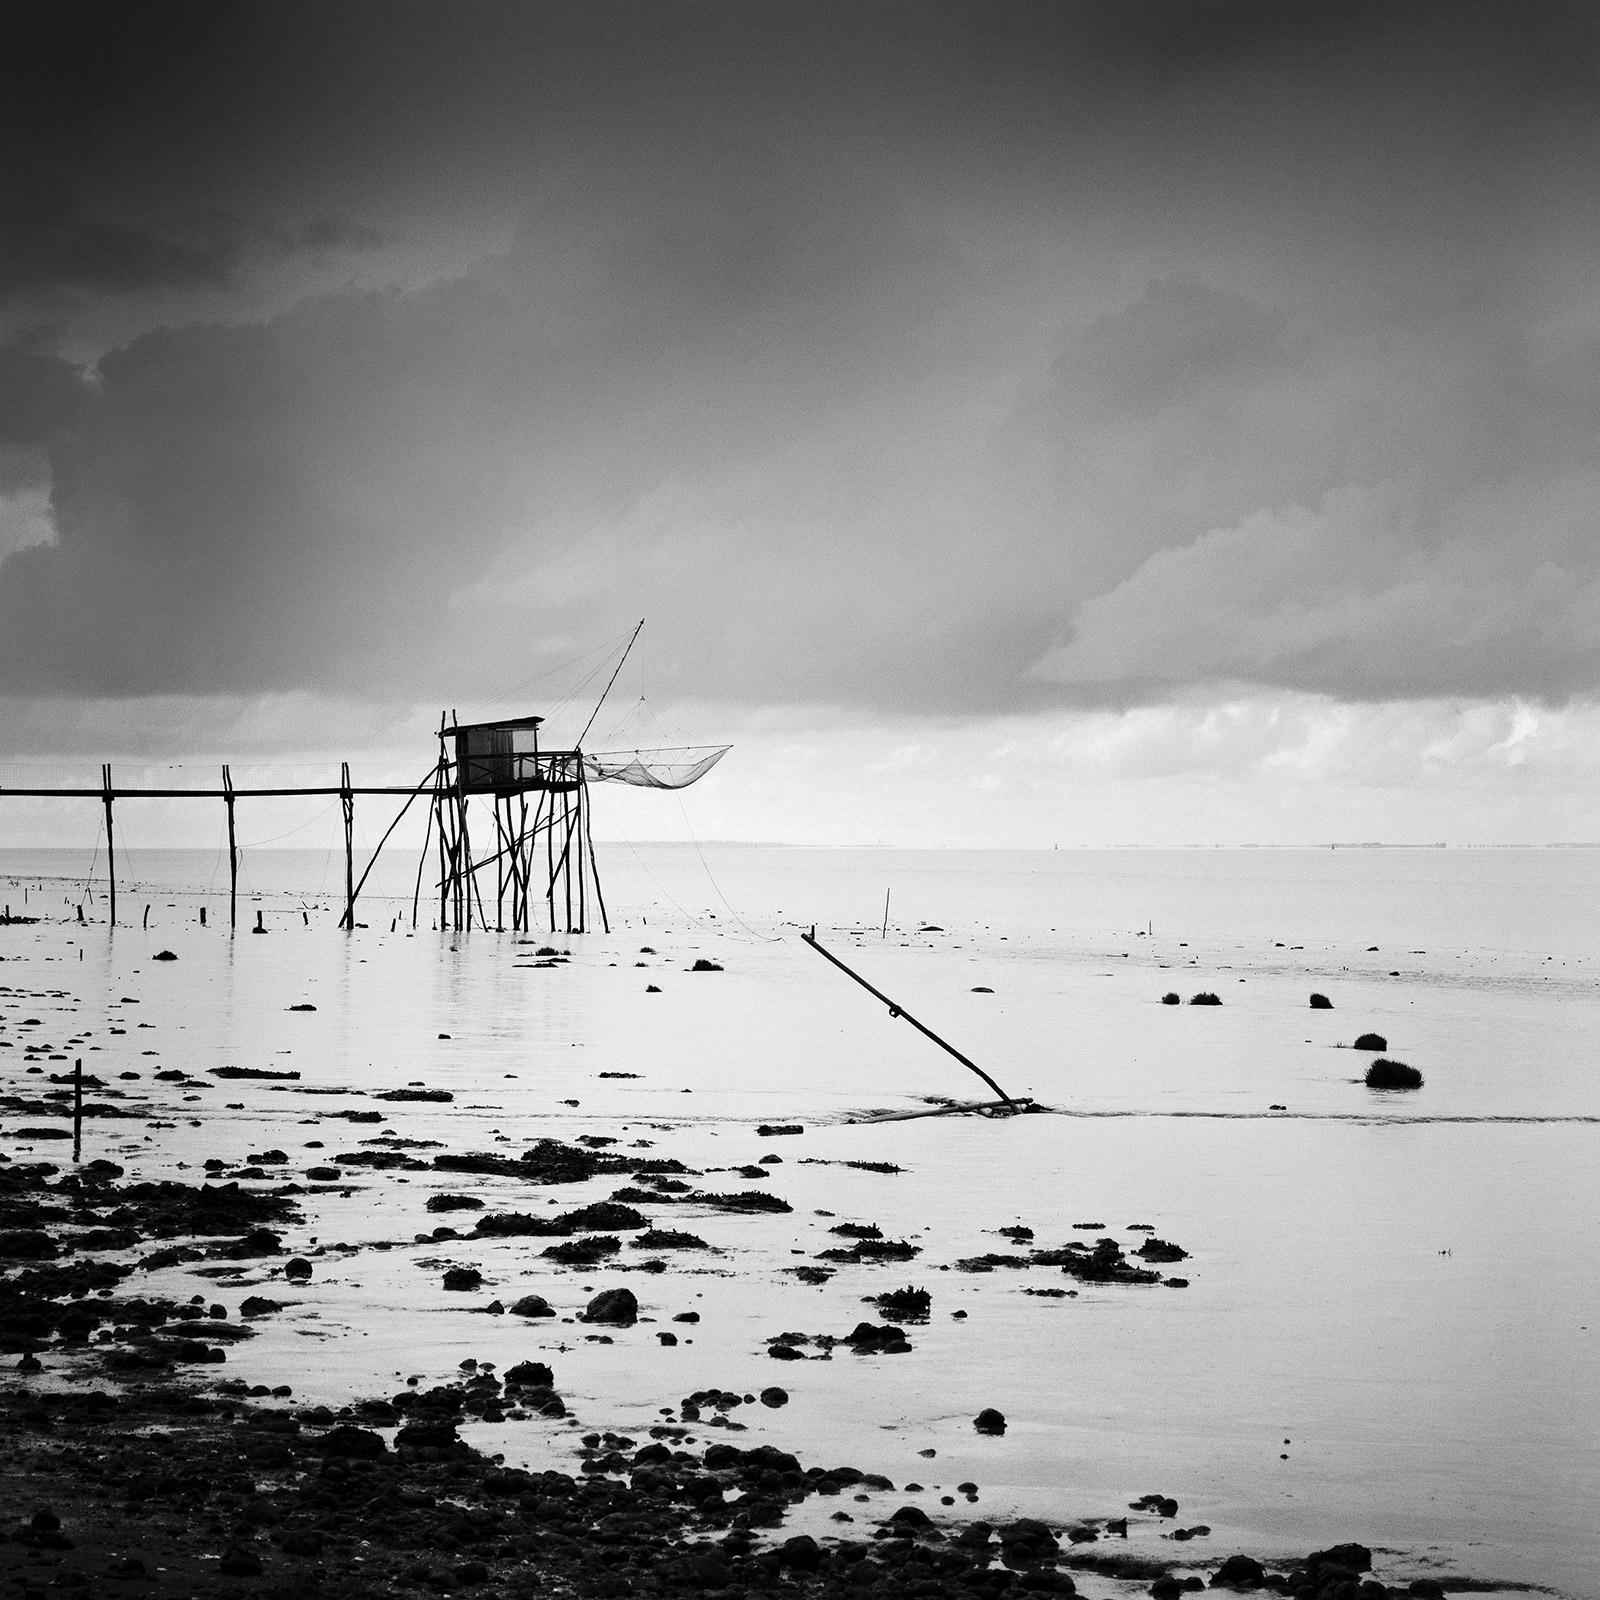 Gerald Berghammer Landscape Photograph - Low tide Fishing, Stilt House, sunset, France,  blackwhite landscape photography